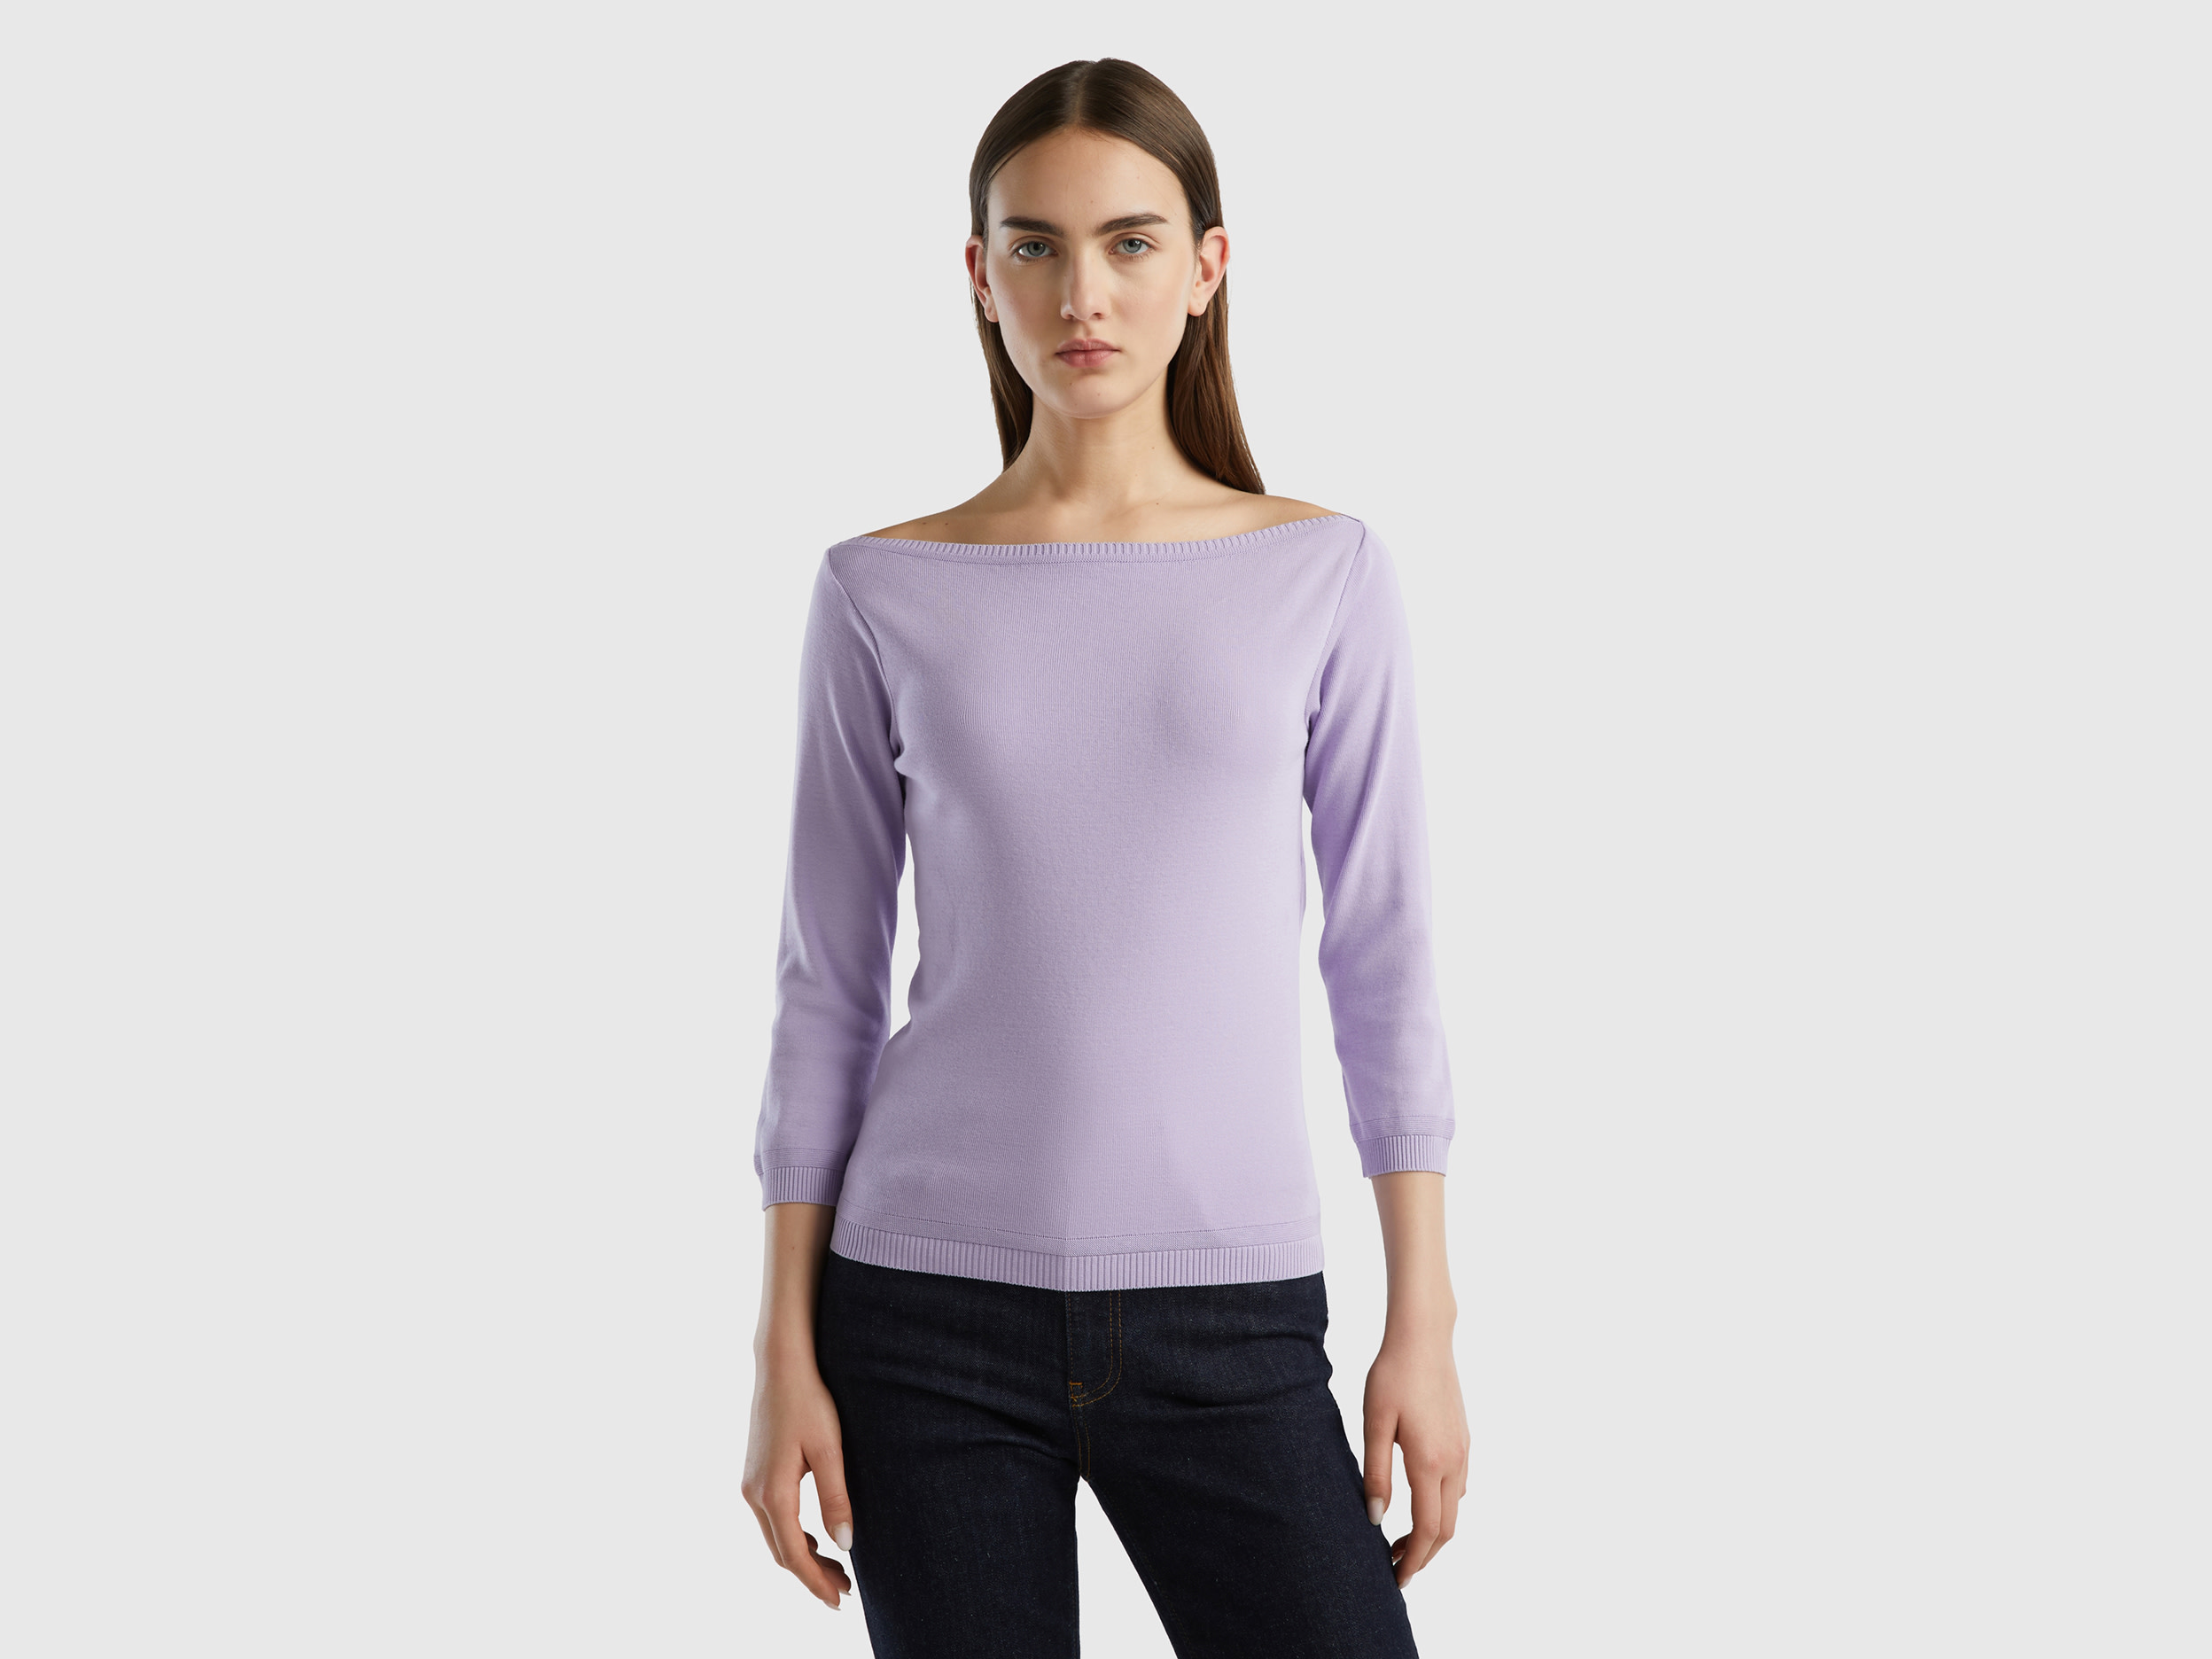 Benetton, 100% Cotton Boat Neck Sweater, size L, Lilac, Women